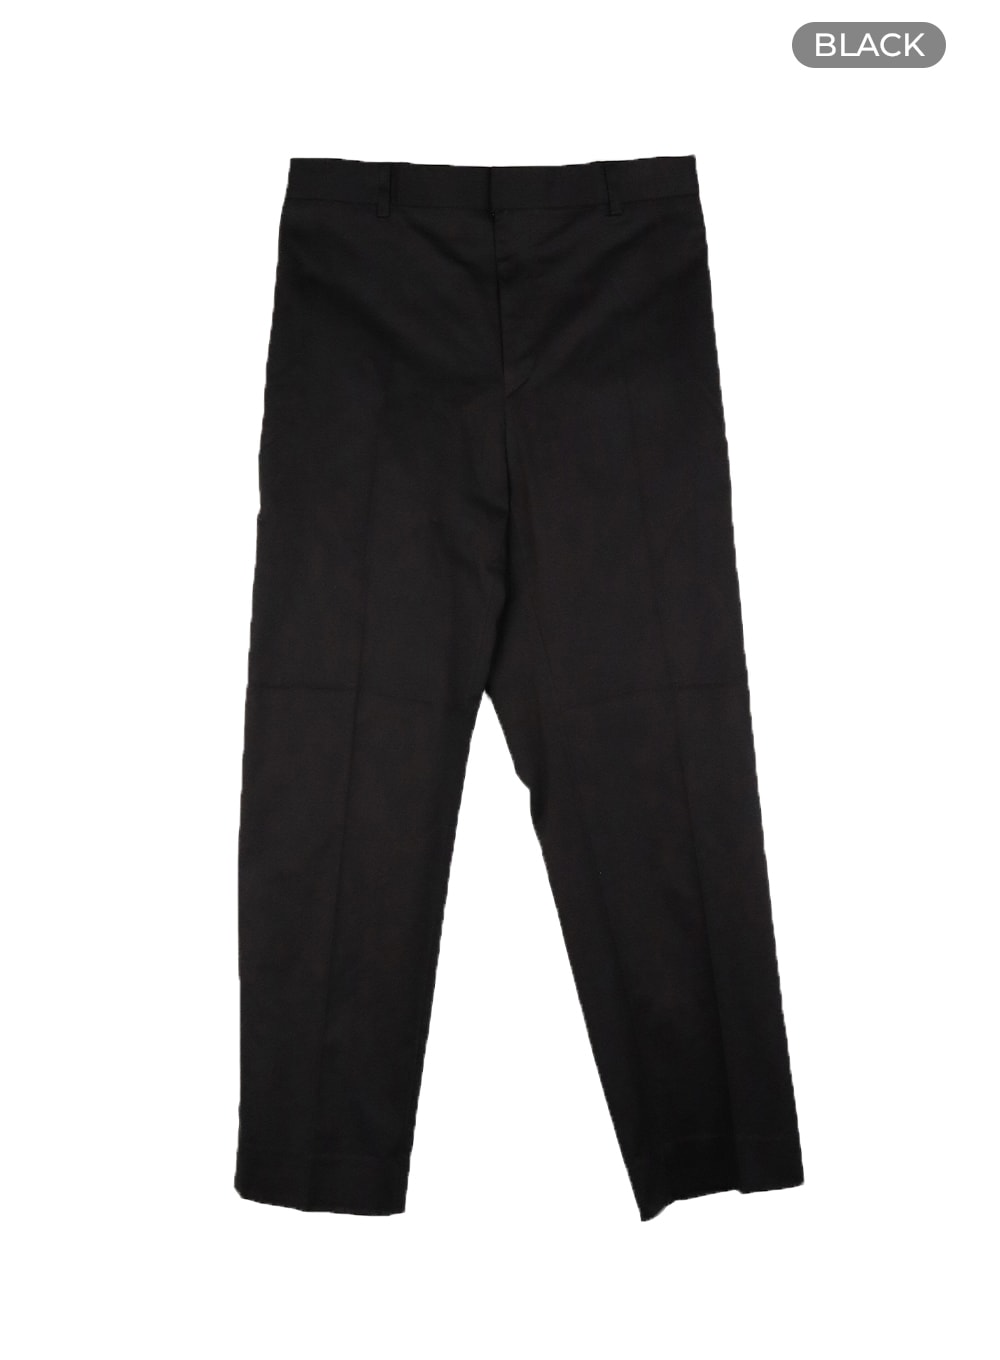 mens-classic-straight-trousers-ia401 / Black